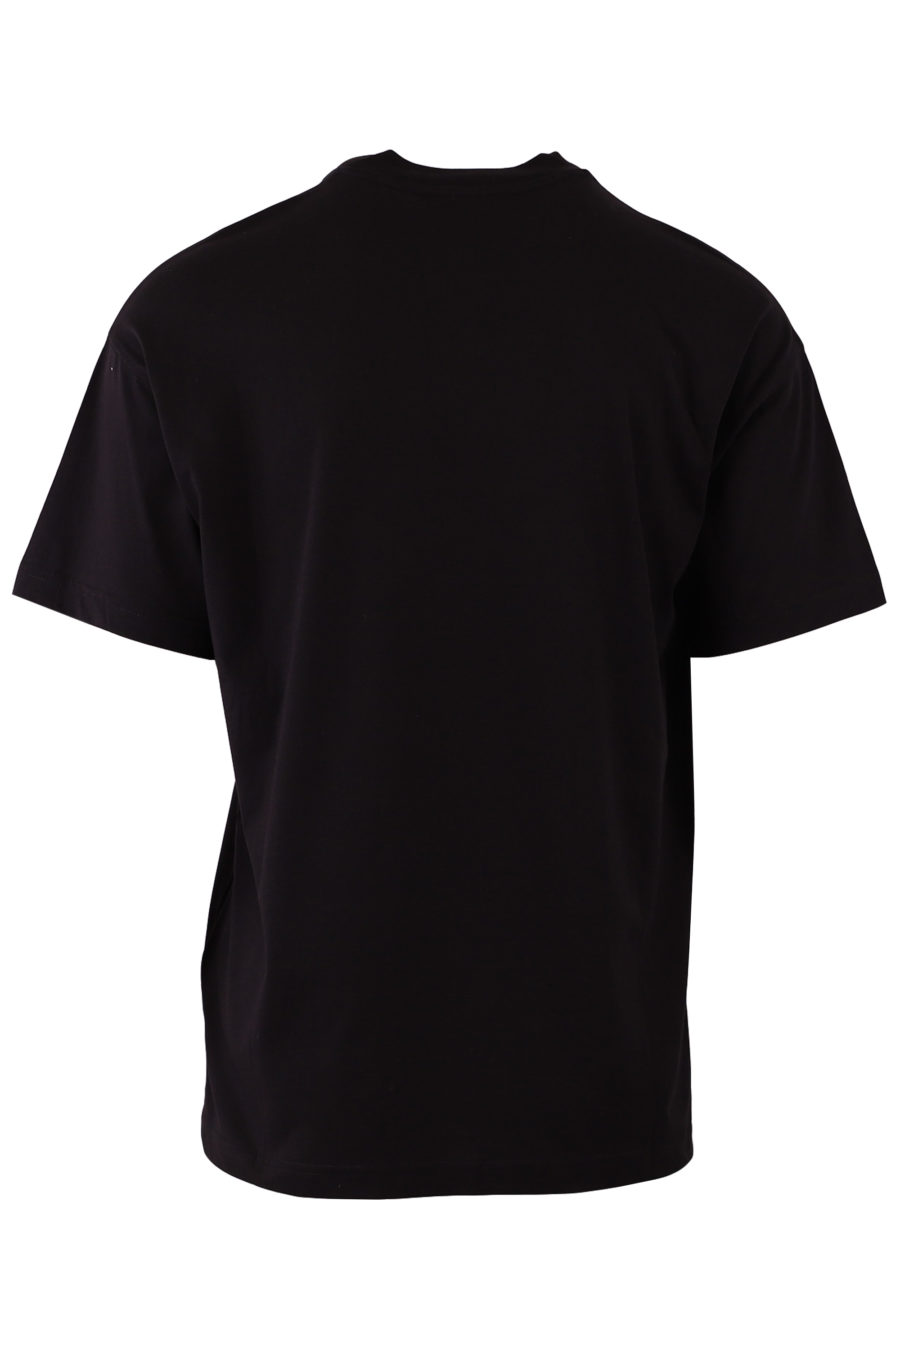 Schwarzes T-Shirt mit rot-weißem Logo - c742a174ef84f0379f8c6181254770c75b057efc